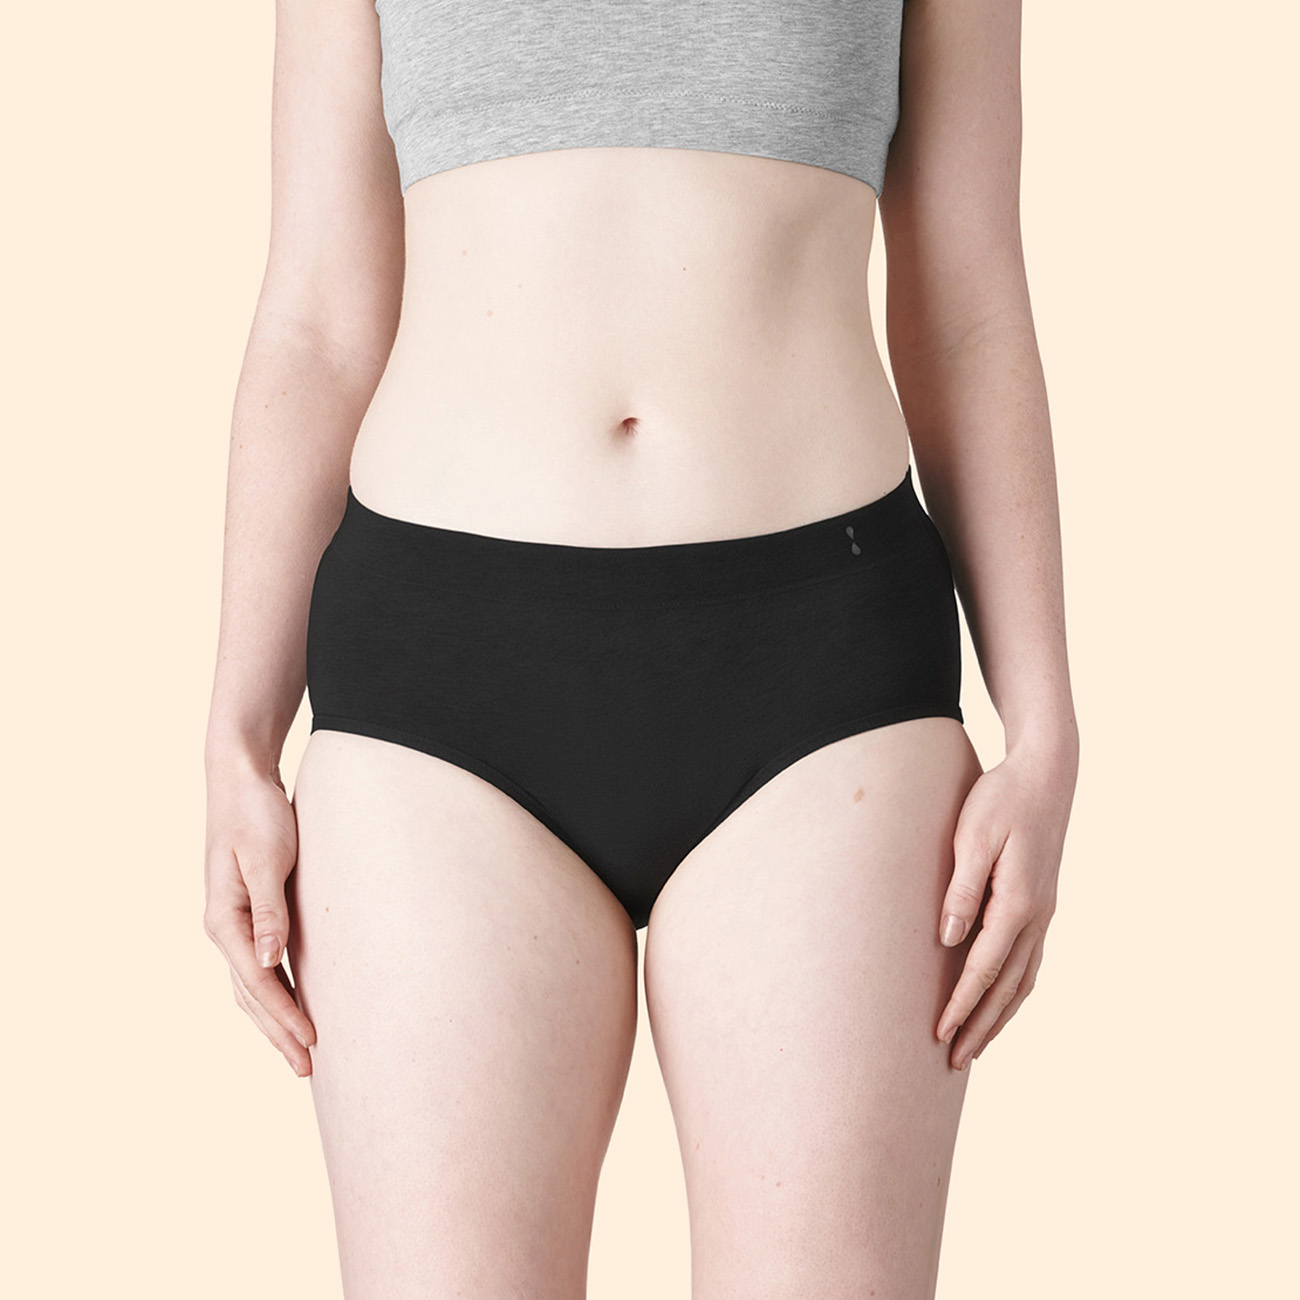 Thinx for All Women's Super Absorbency Cotton Brief Period Underwear,  Black, Medium - CVS Pharmacy